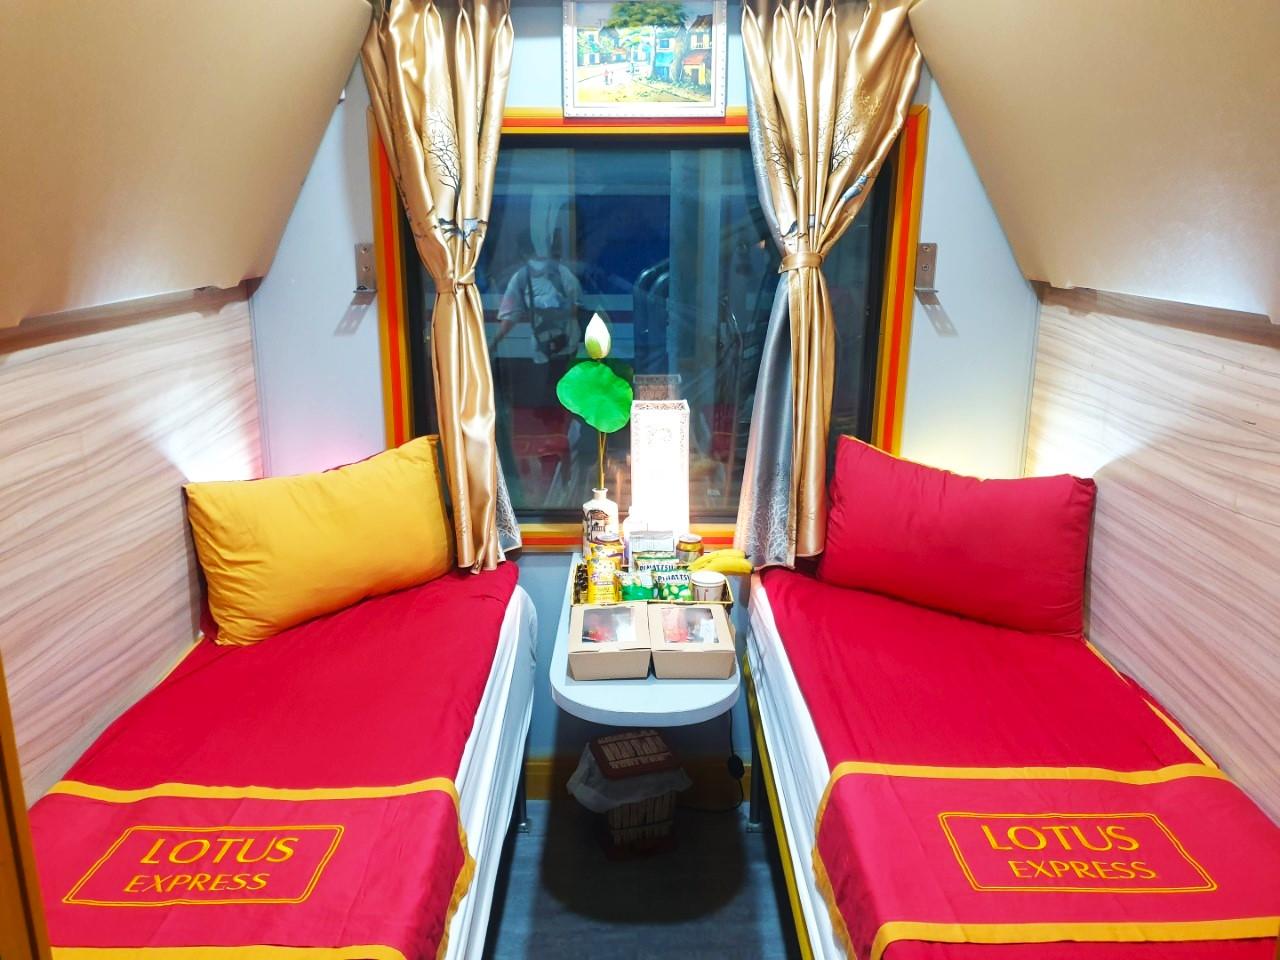 Ninh Binh - Da Nang in VIP 2 berth-cabin on SE19 (22h02 – 12h28) - Price per person not per cabin